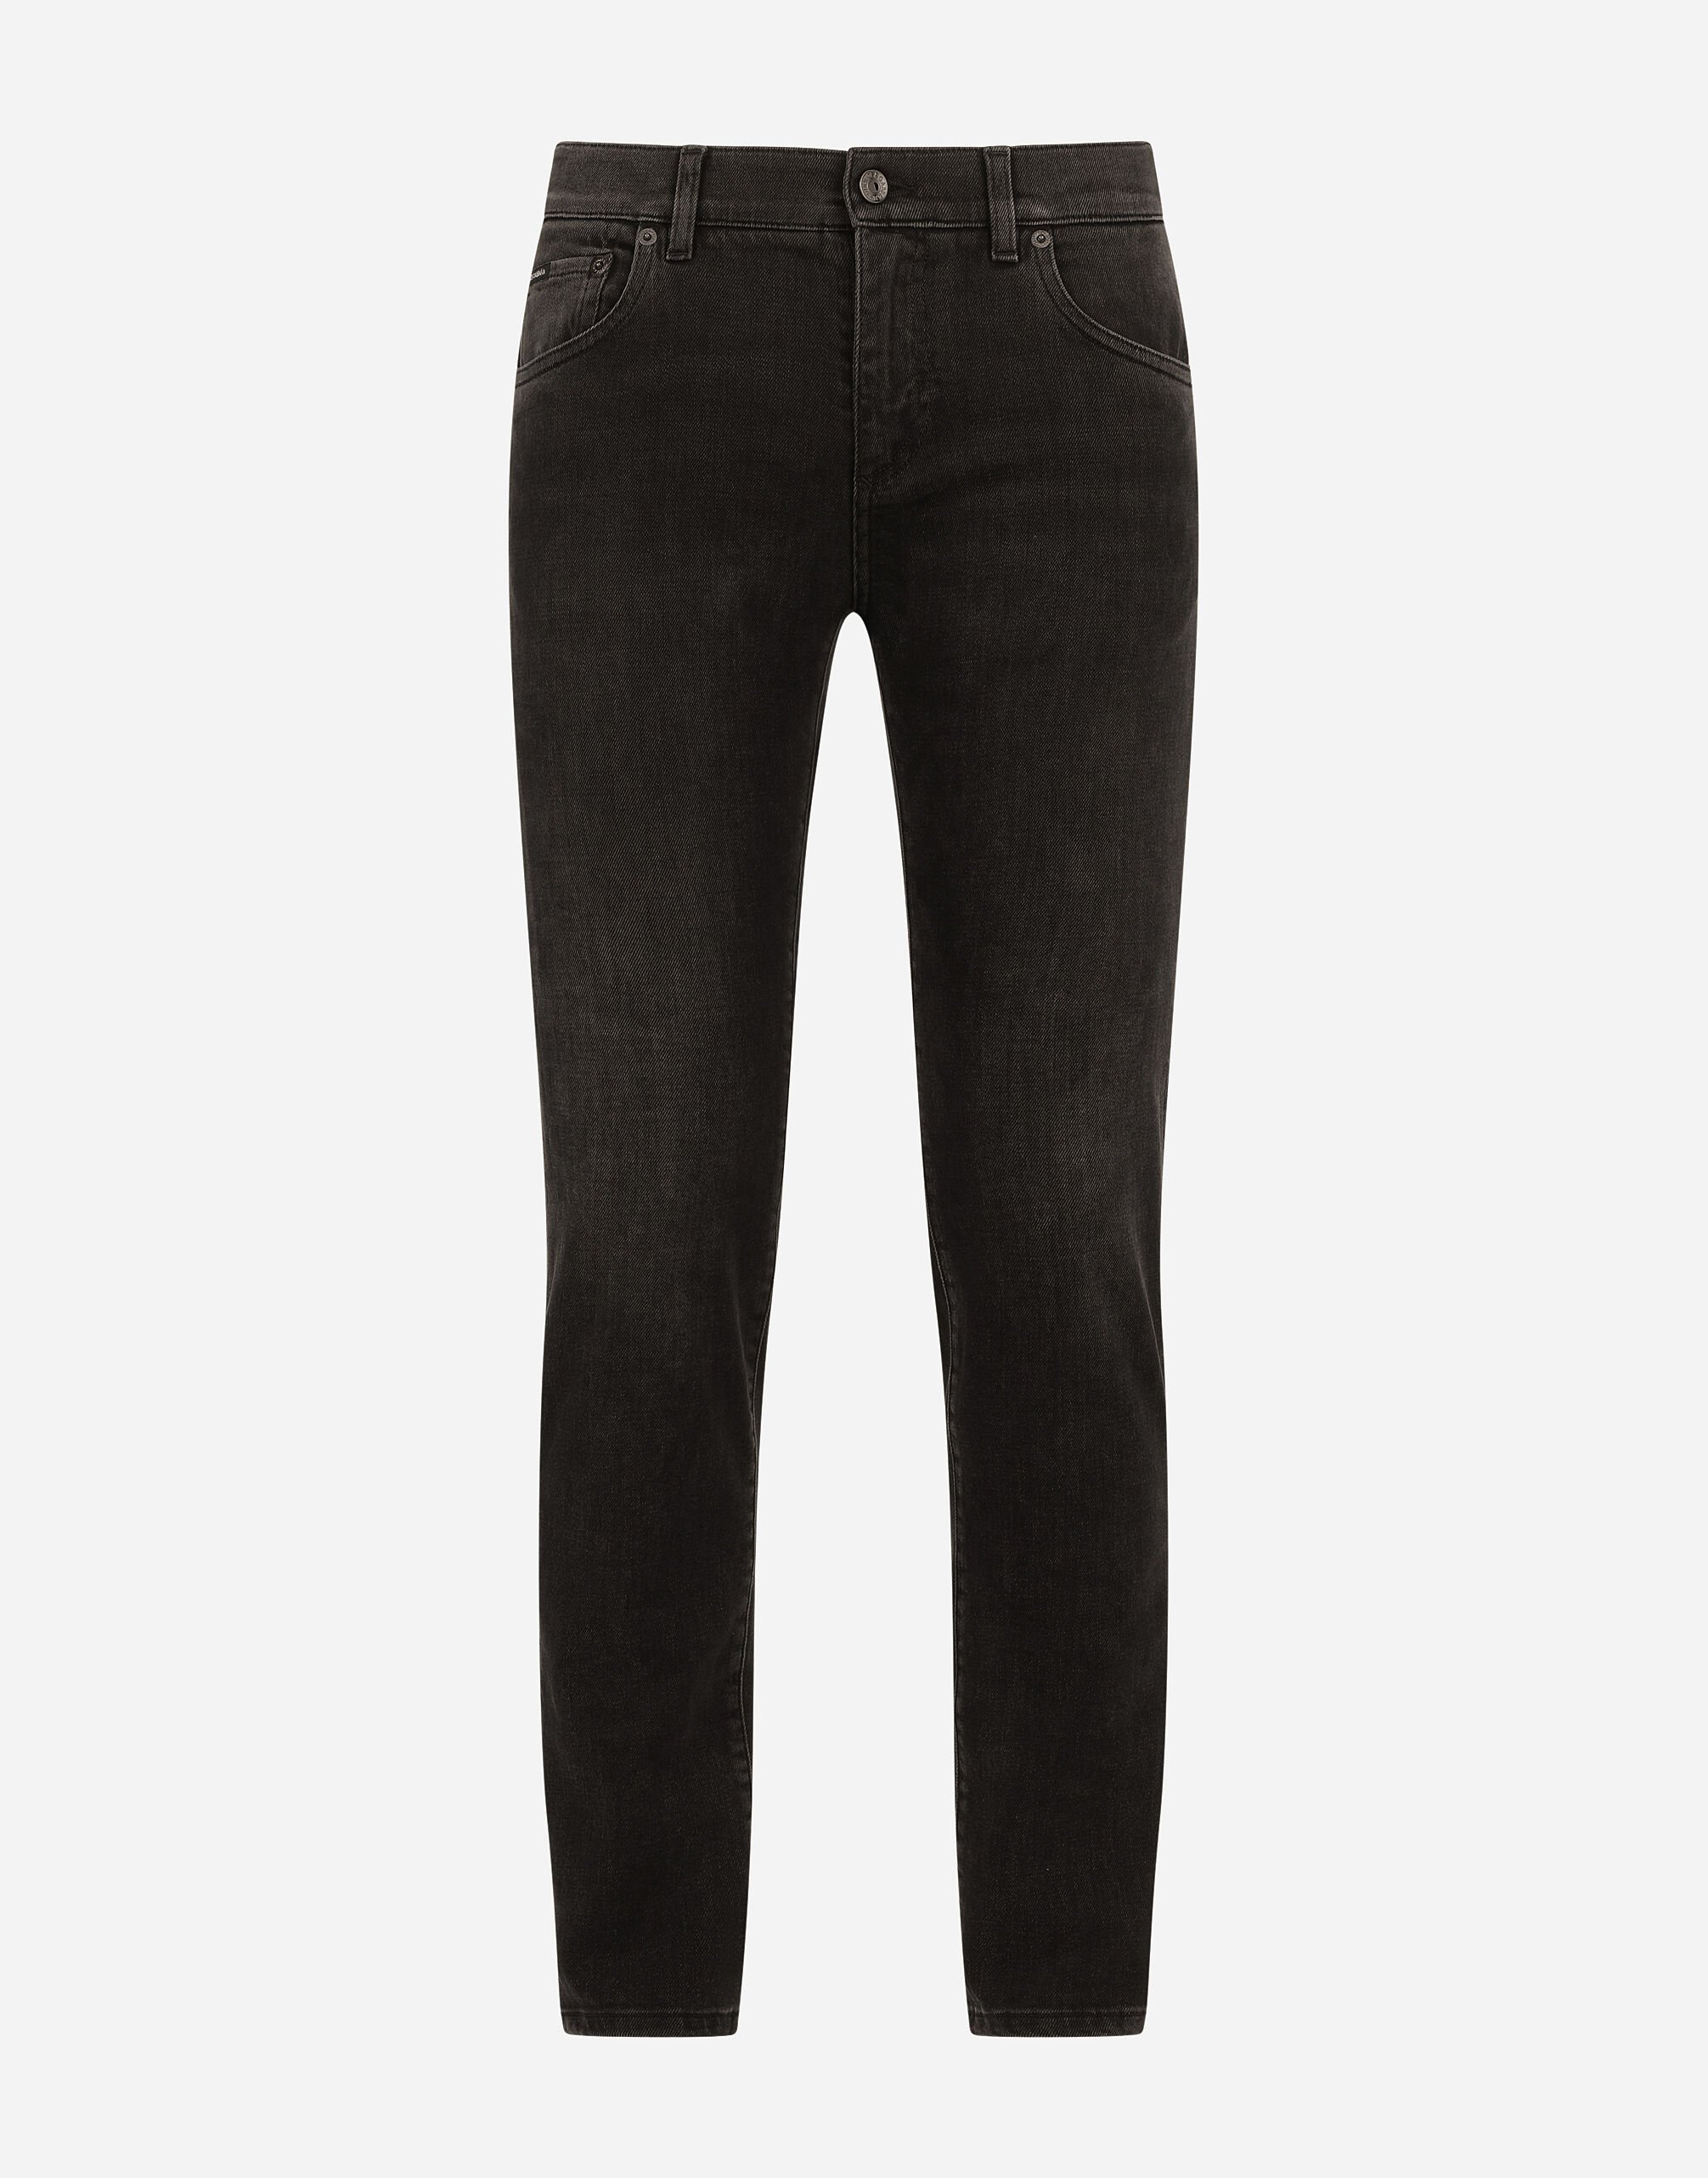 Dolce & Gabbana Black wash skinny stretch jeans Black G8OA3TFU7EQ